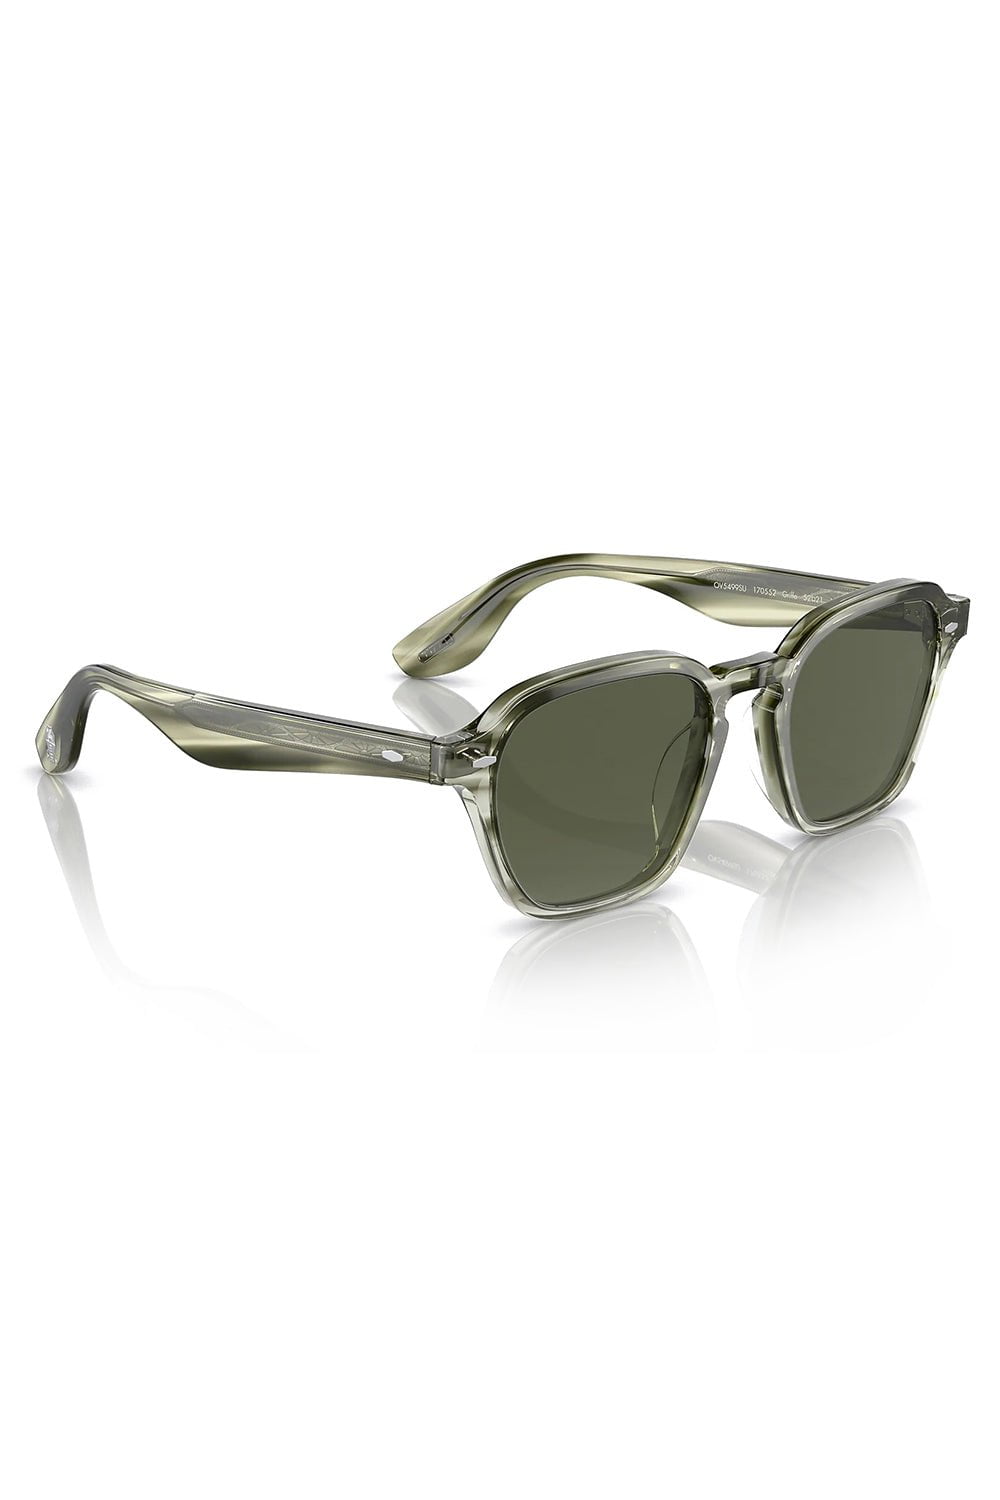 OLIVER PEOPLES-Griffo Sunglasses - Sunwashed Jade-WASHED JADE